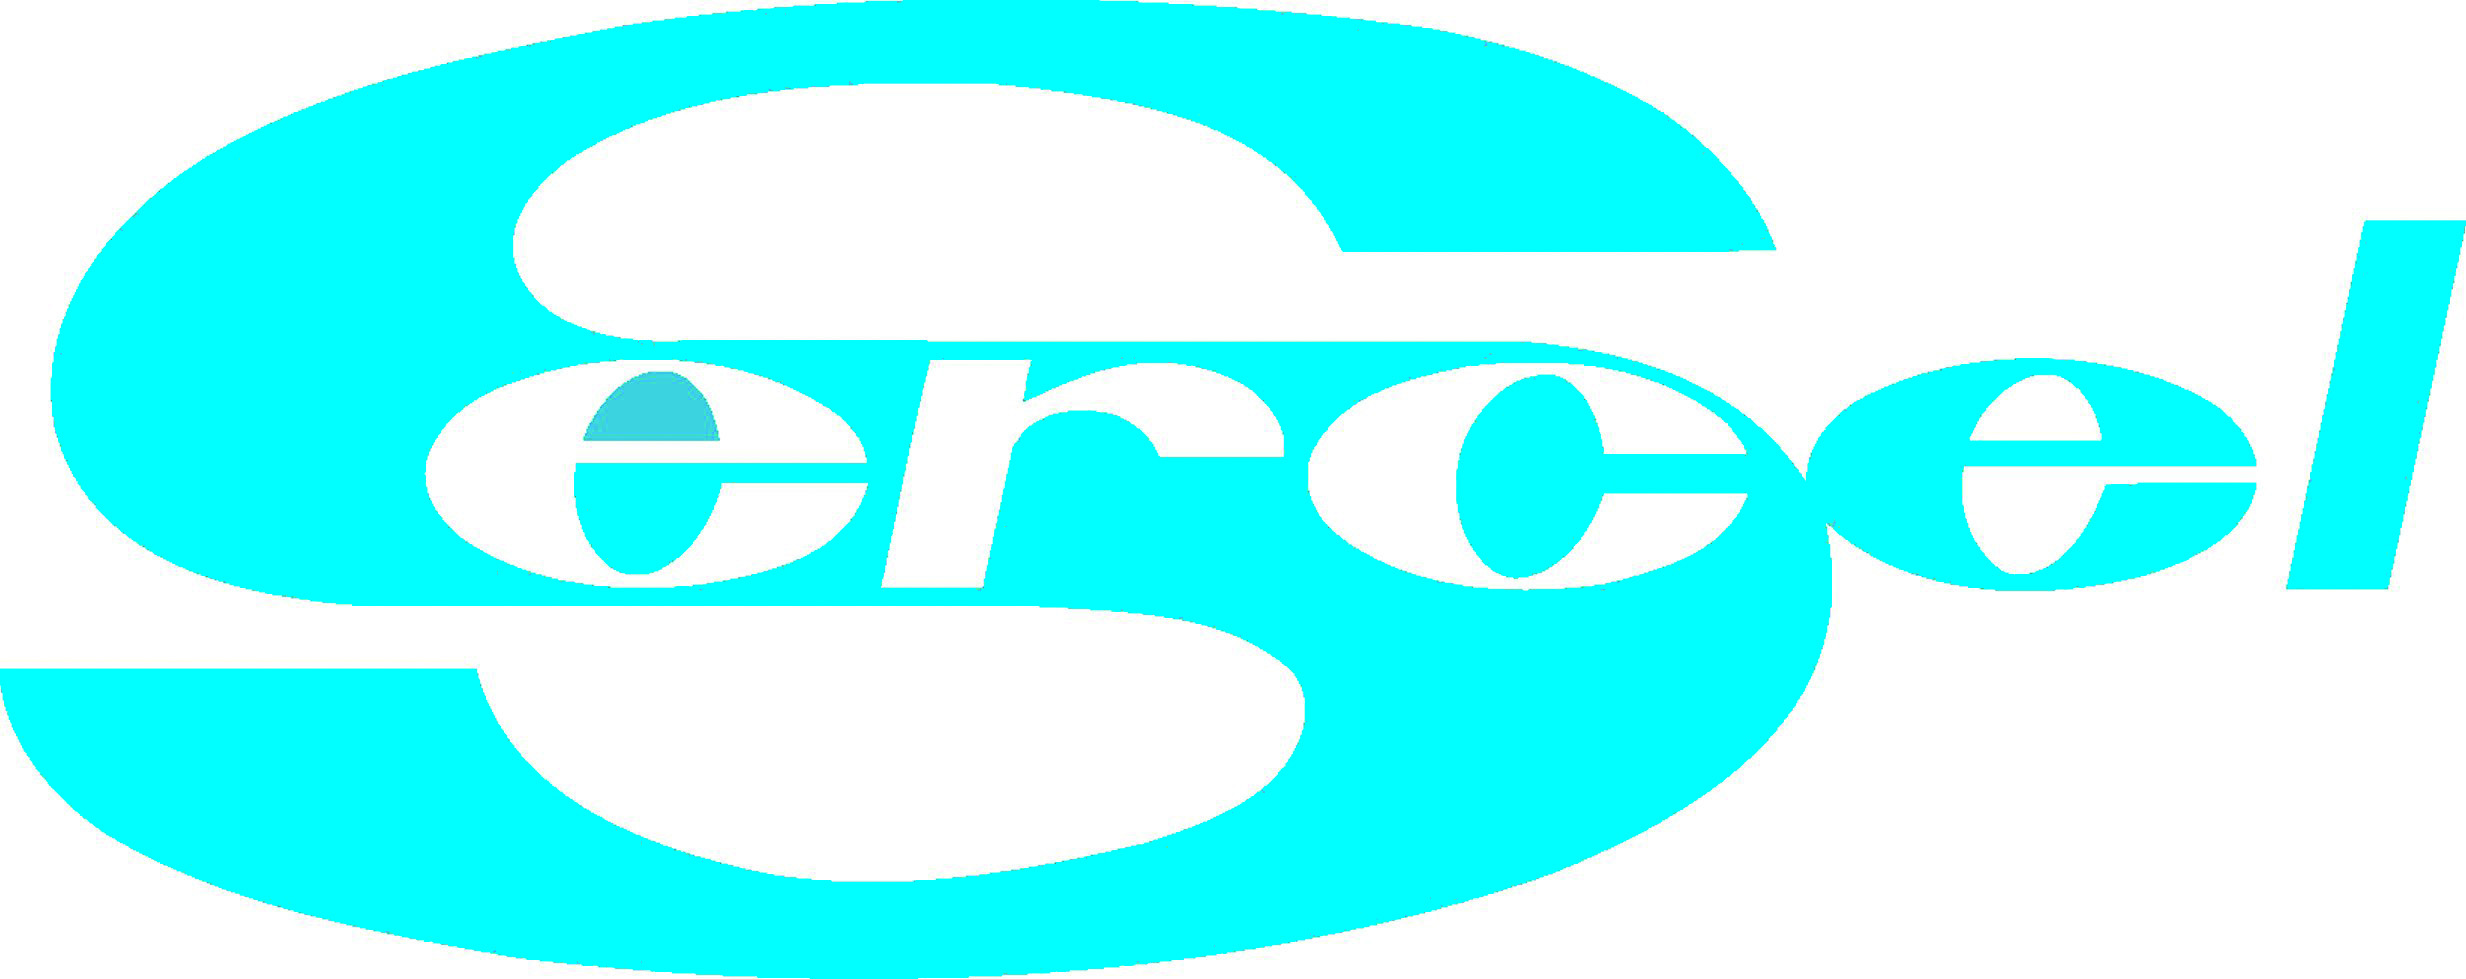 Sercel Concept - logo